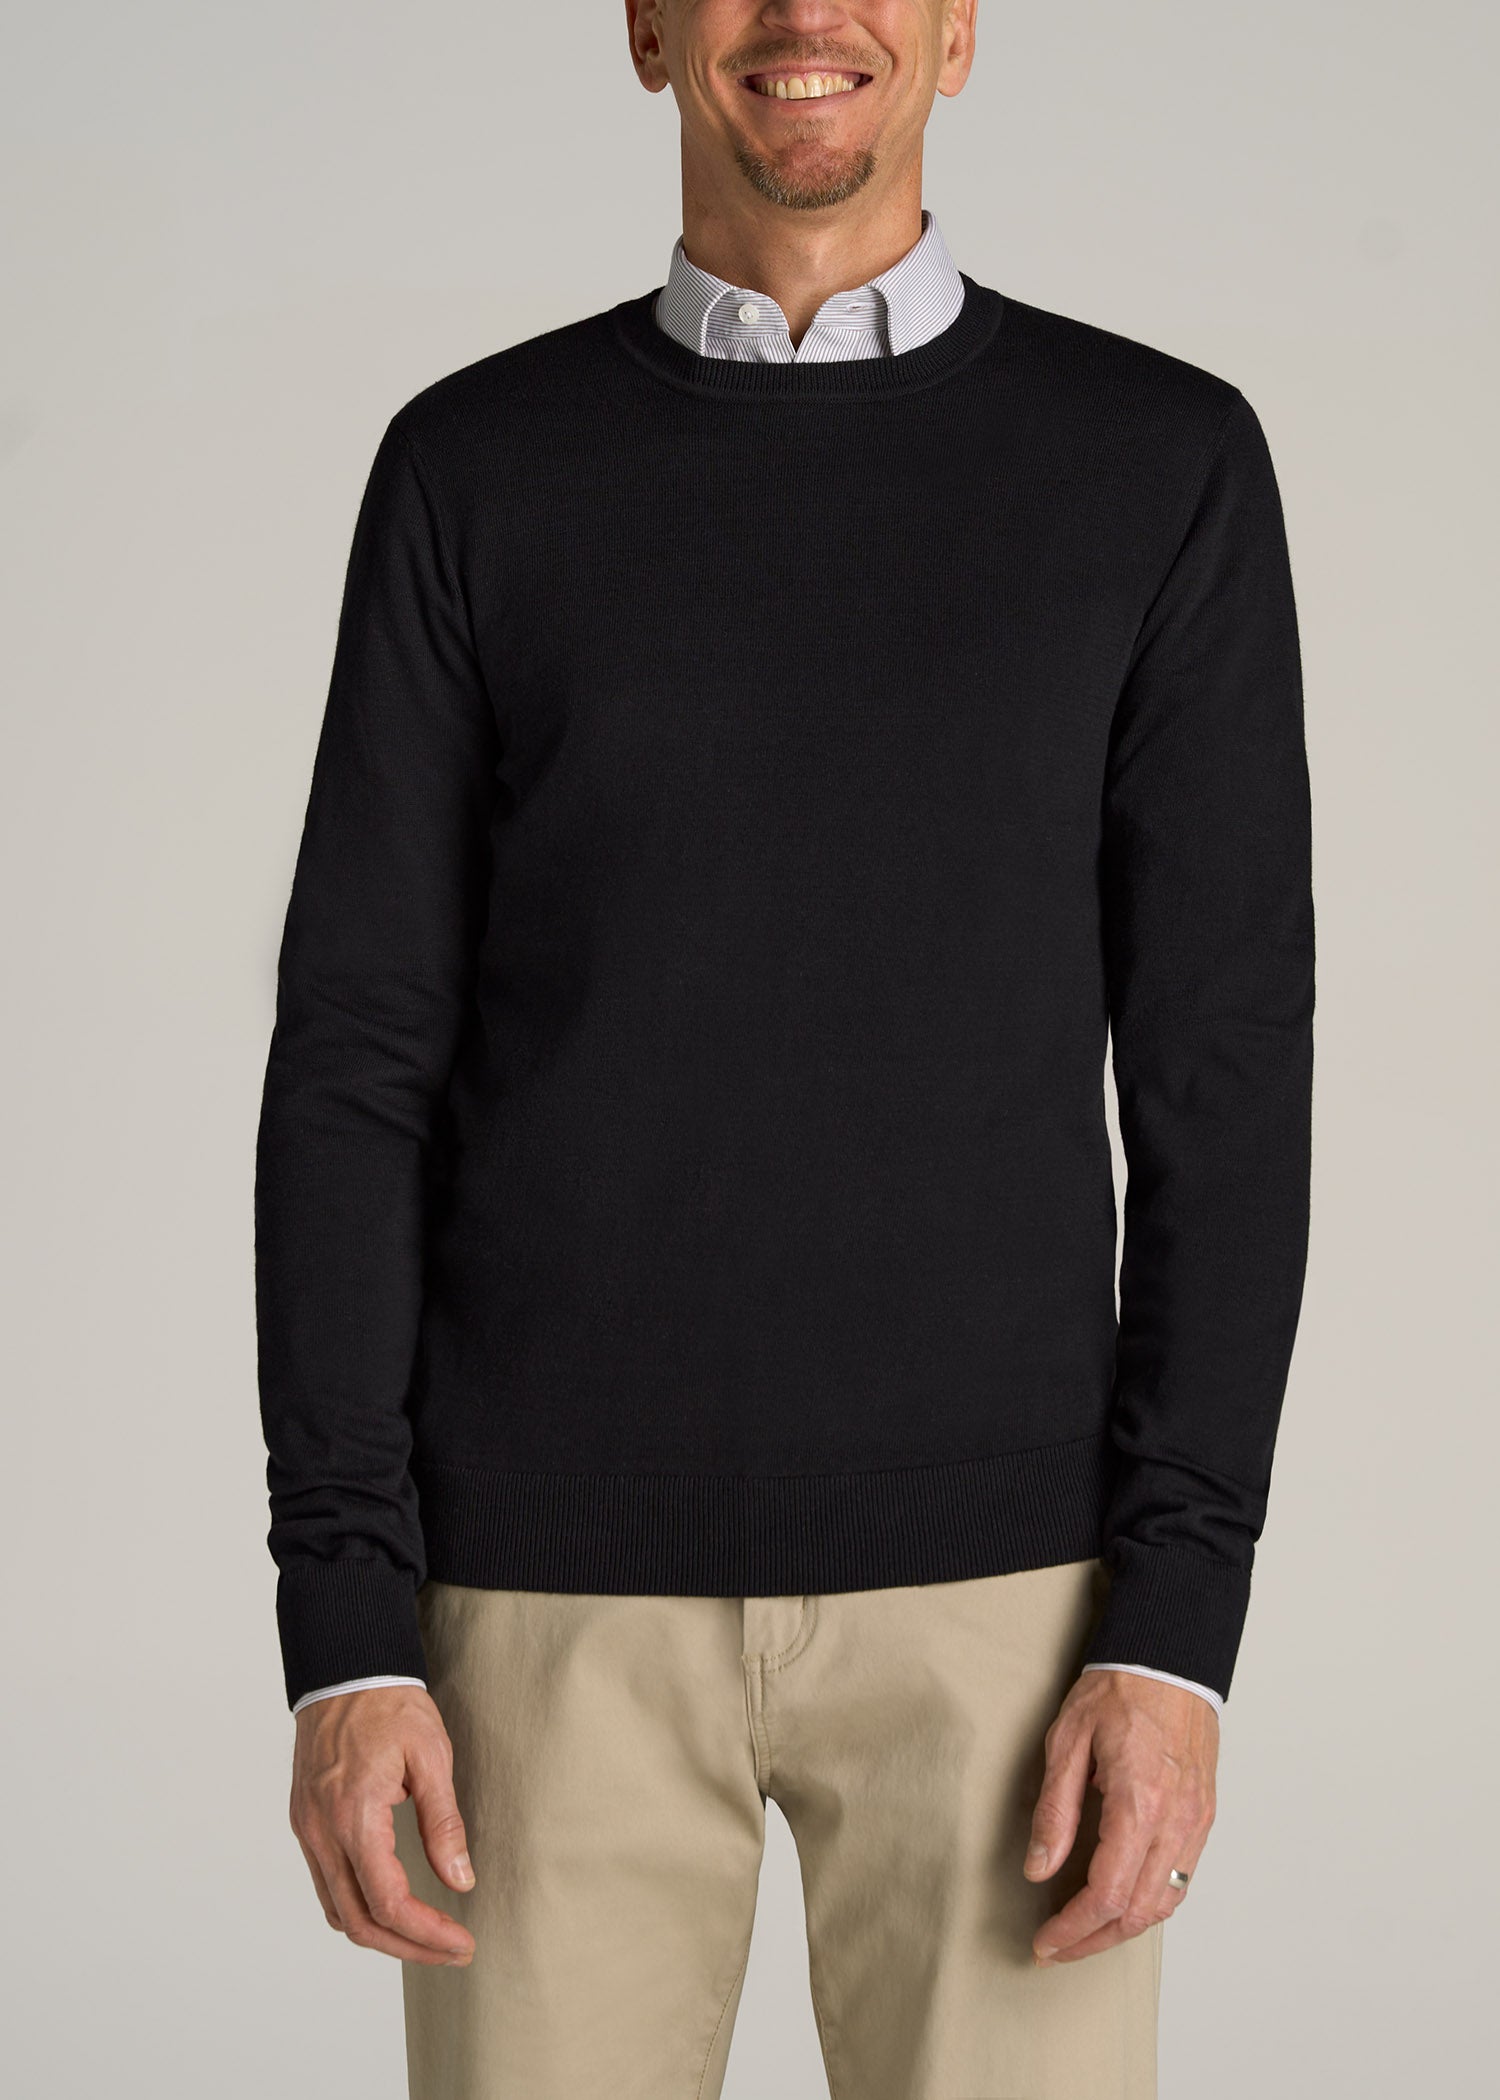 Everyday Crewneck Tall Men's Sweater in Black